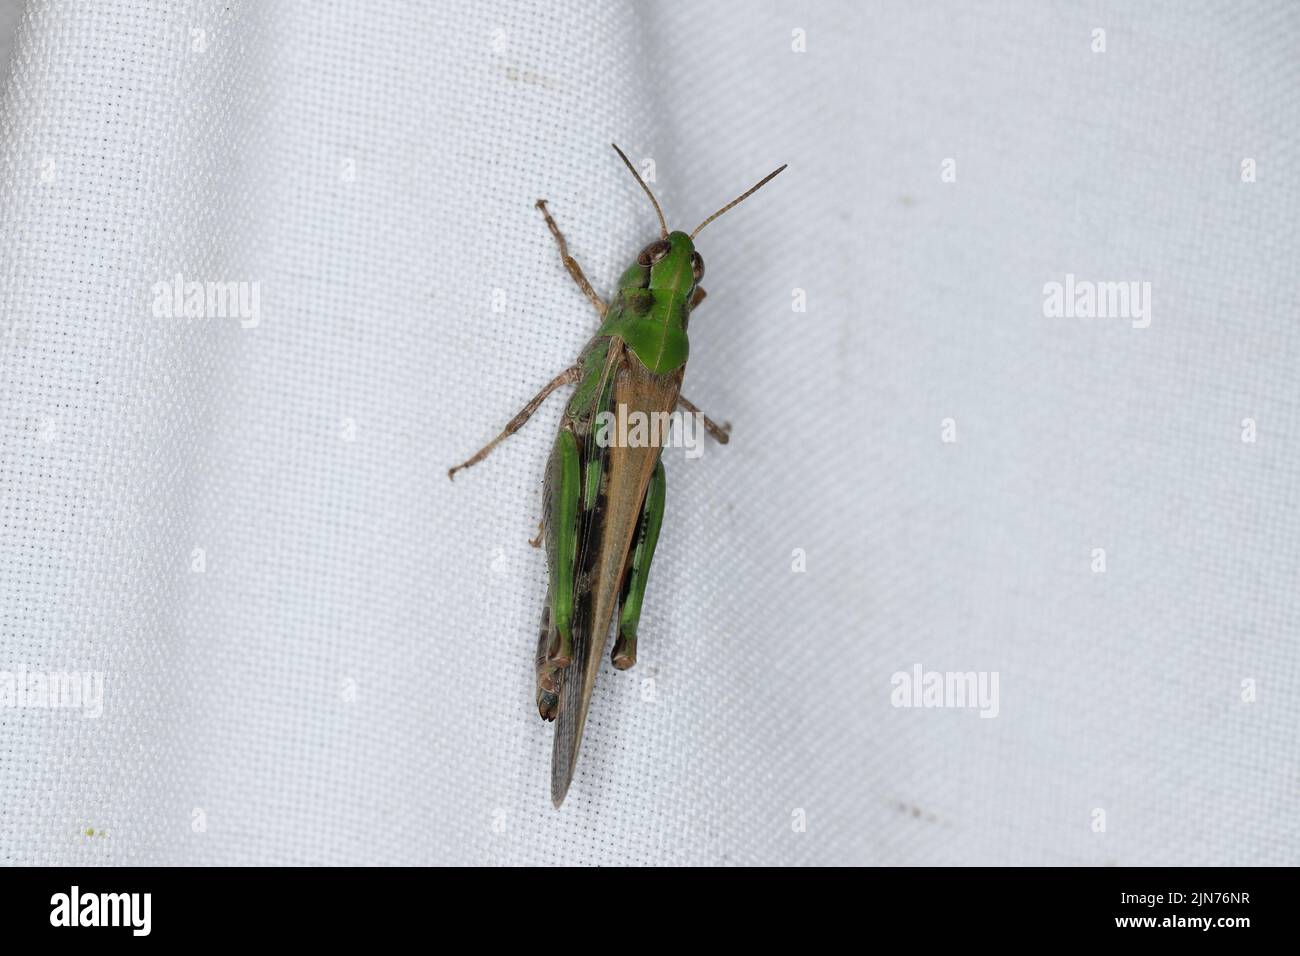 A Common green grasshopper on white fabric. Stock Photo